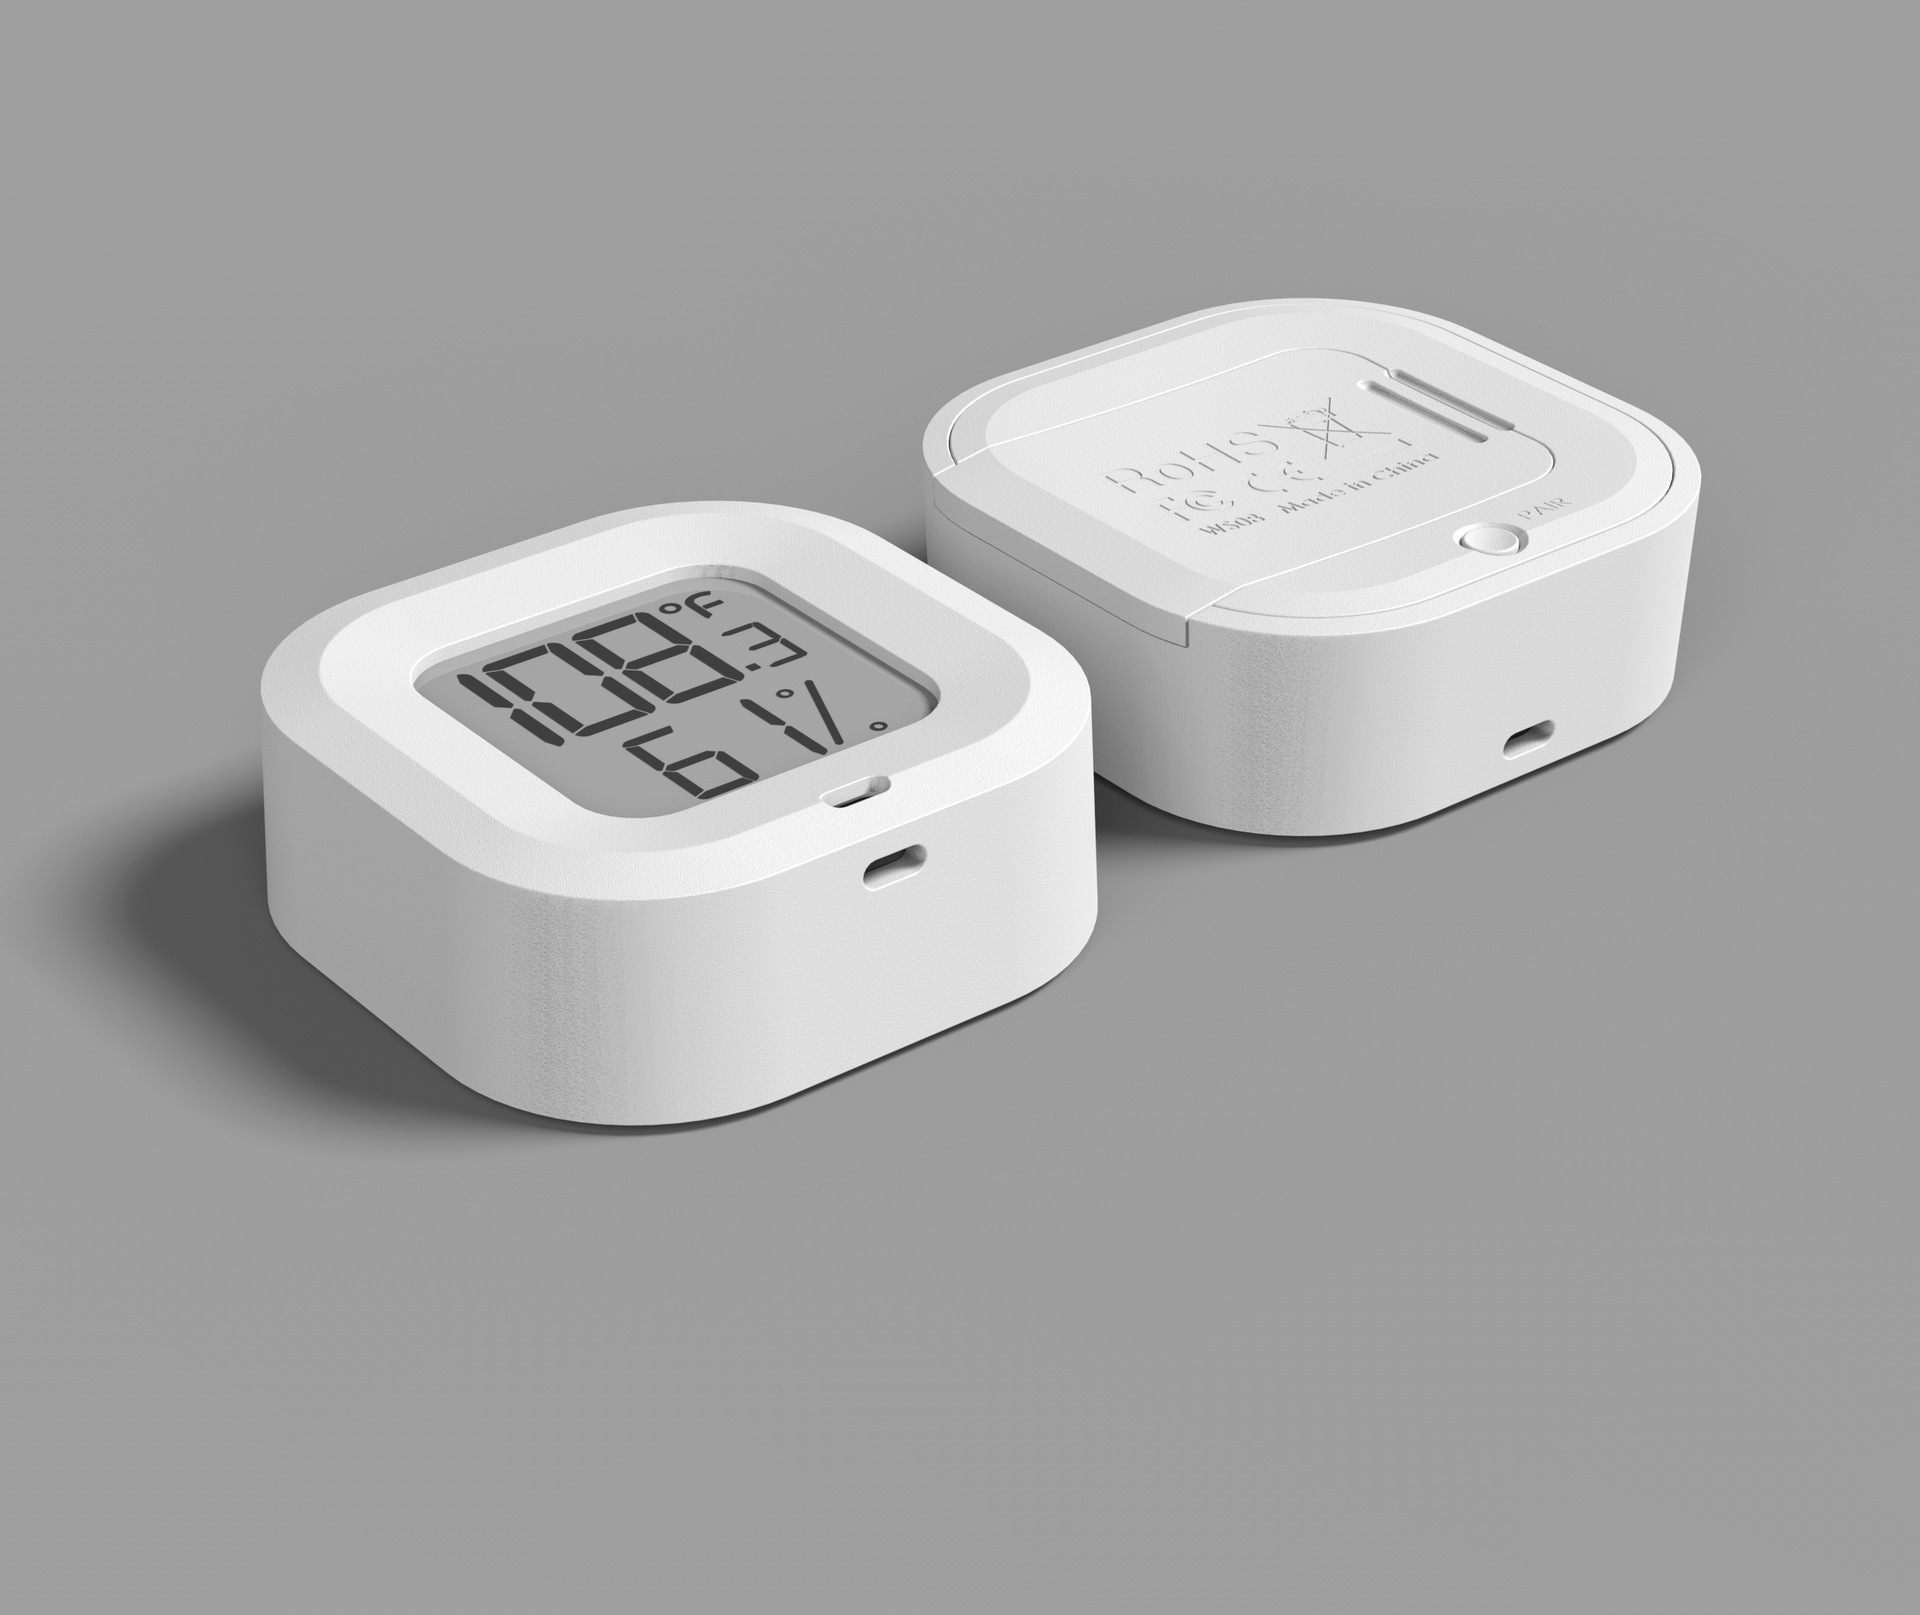 Bluetooth Thermohygrometer Temperature and Humidity Sensor